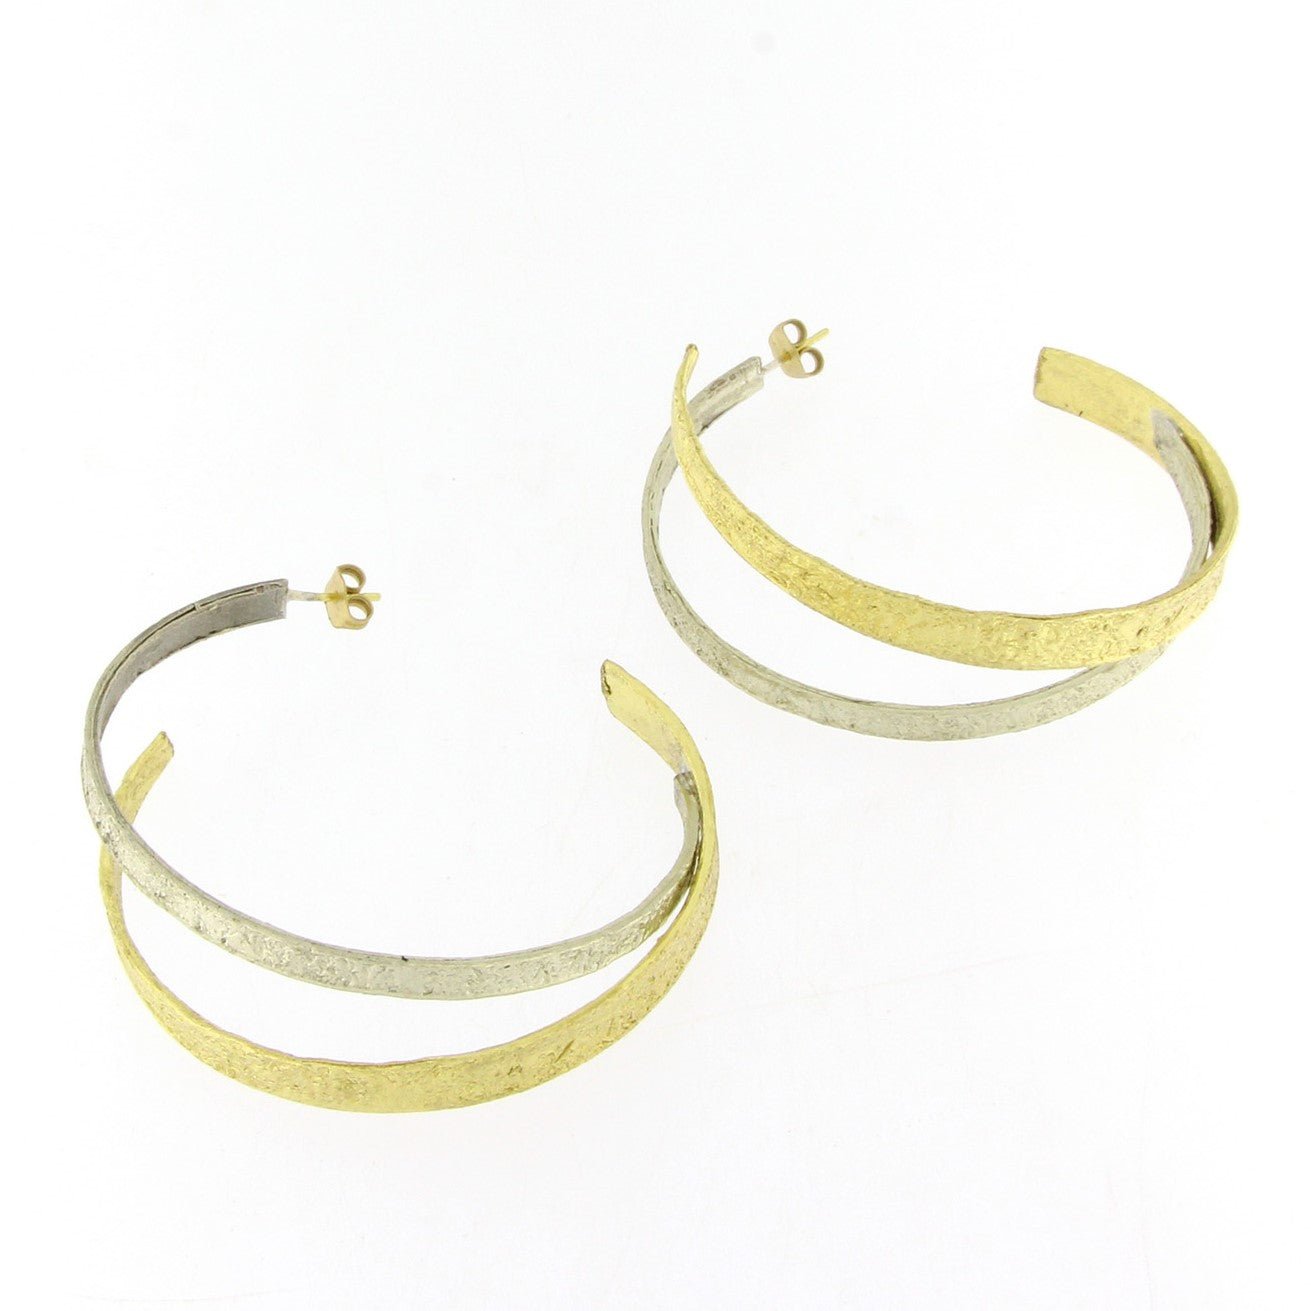 Hoop Earrings - The Nancy Smillie Shop - Art, Jewellery & Designer Gifts Glasgow